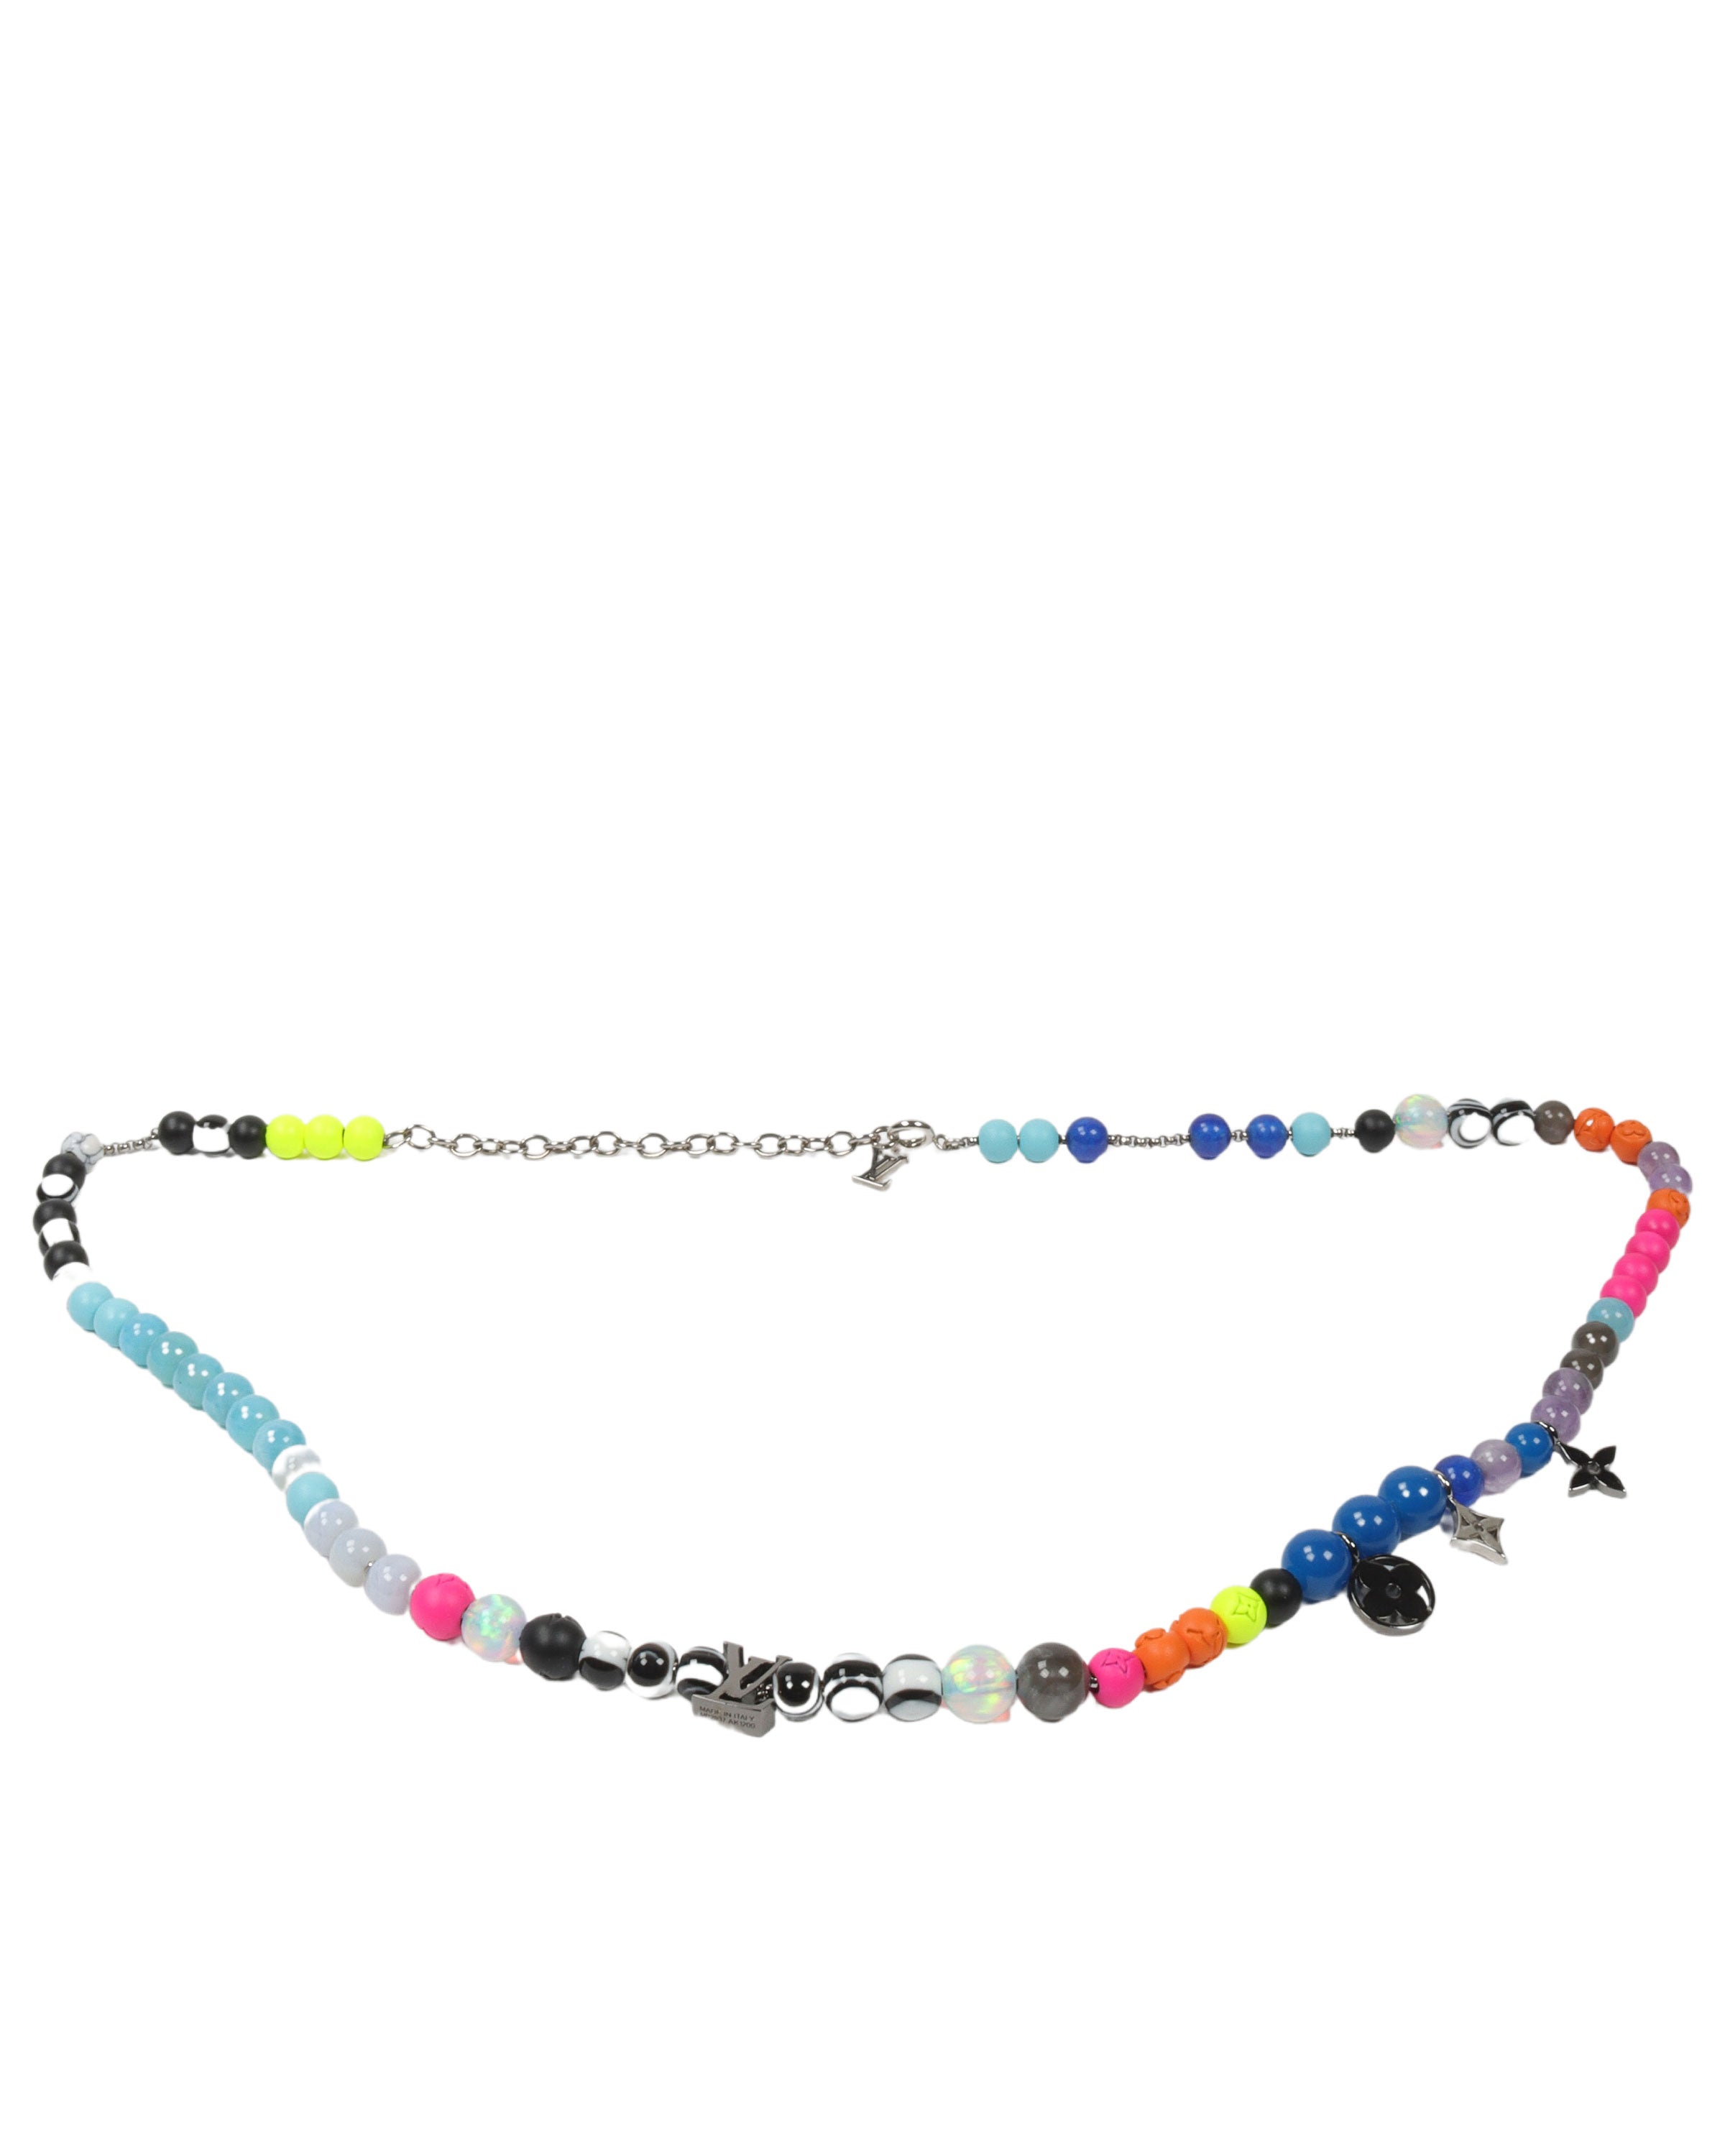 Louis Vuitton Necklace on Jasper Beads